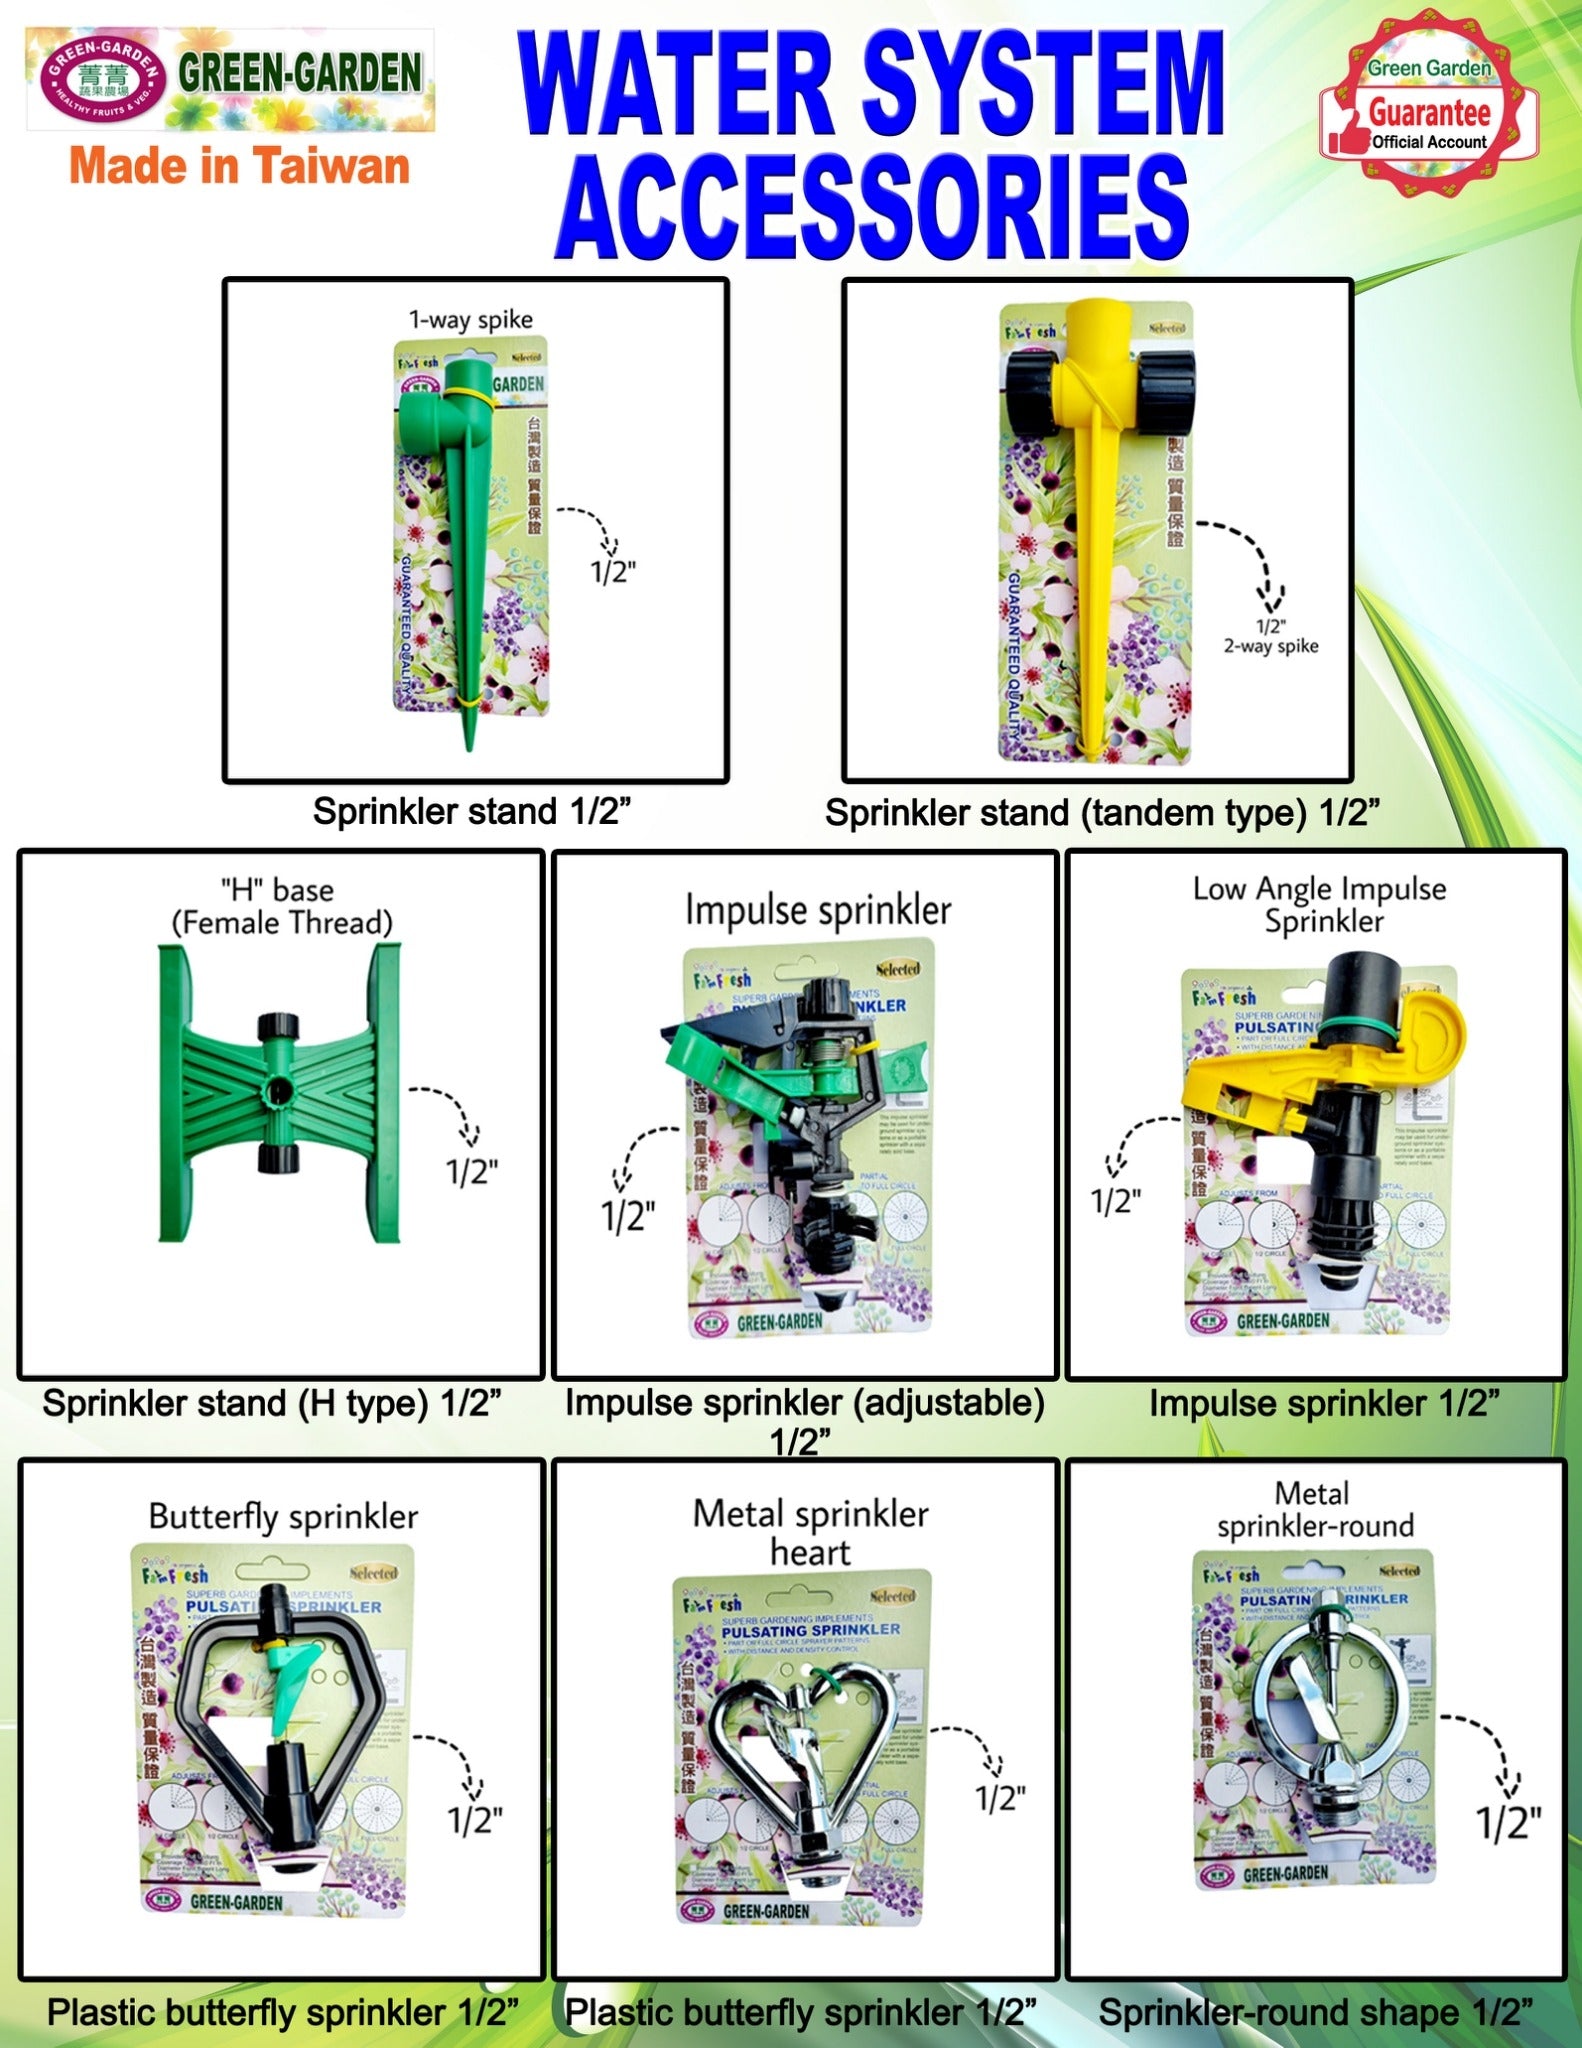 Water System Accessories Impulse Sprinkler 1/2" (Adjustable)